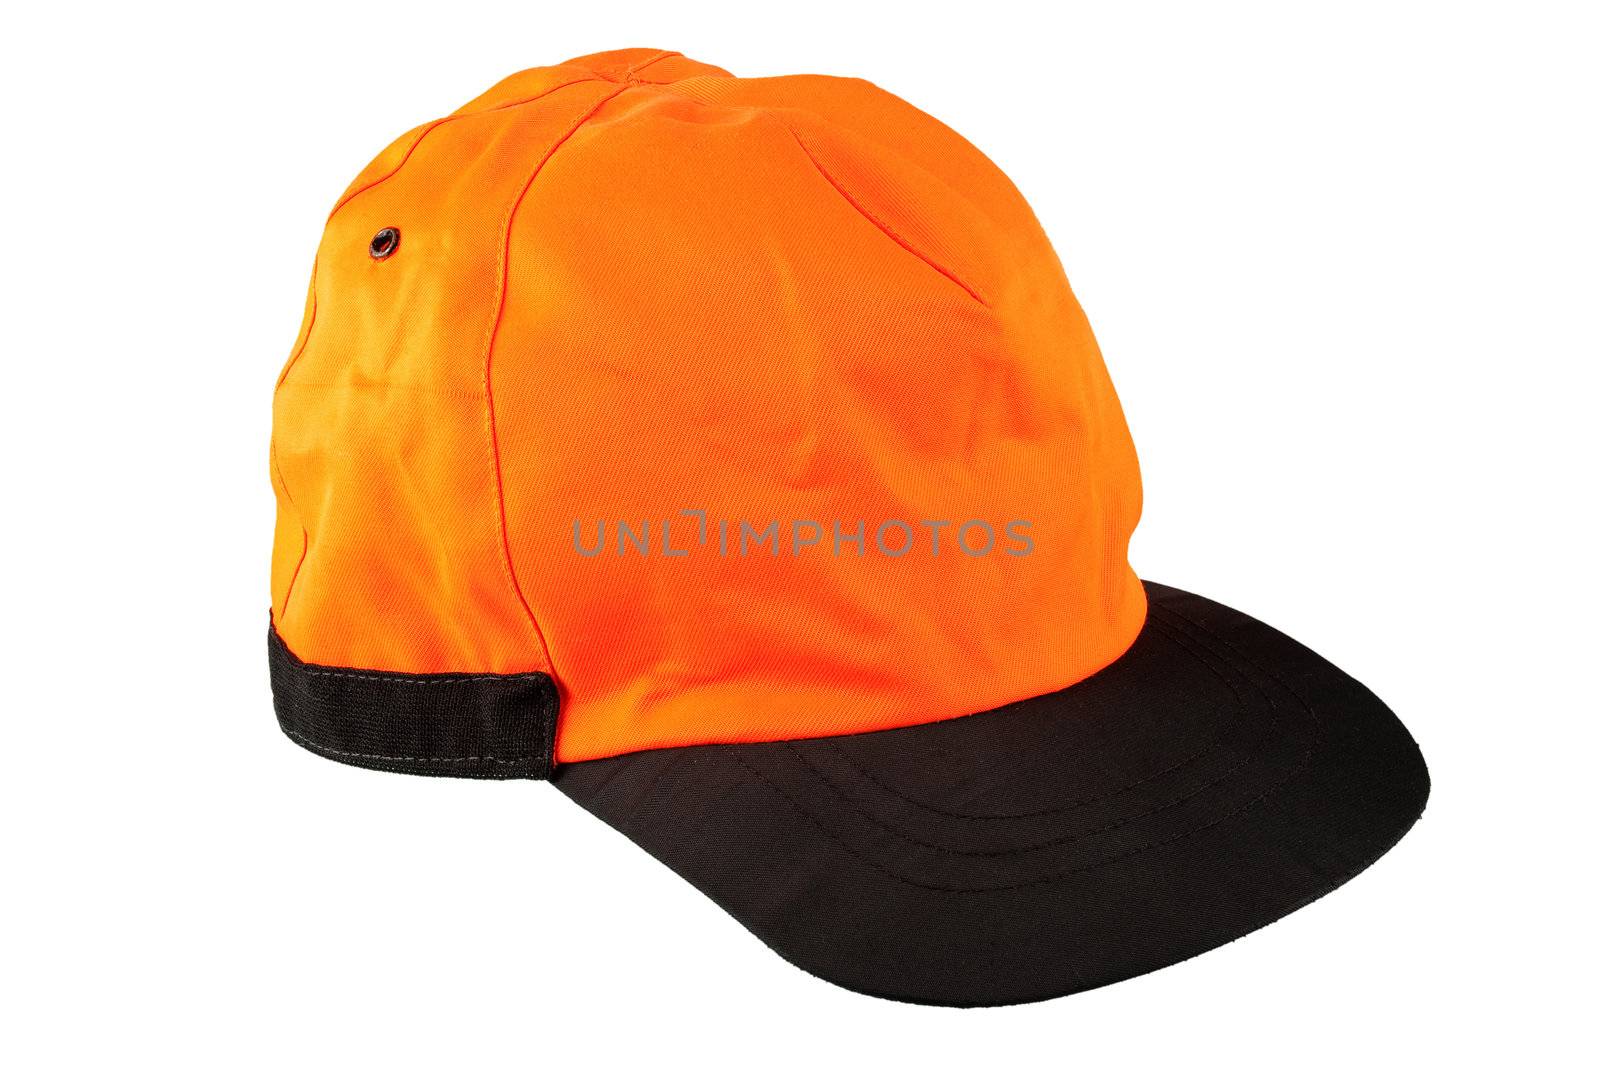 Orange cap by Verdateo